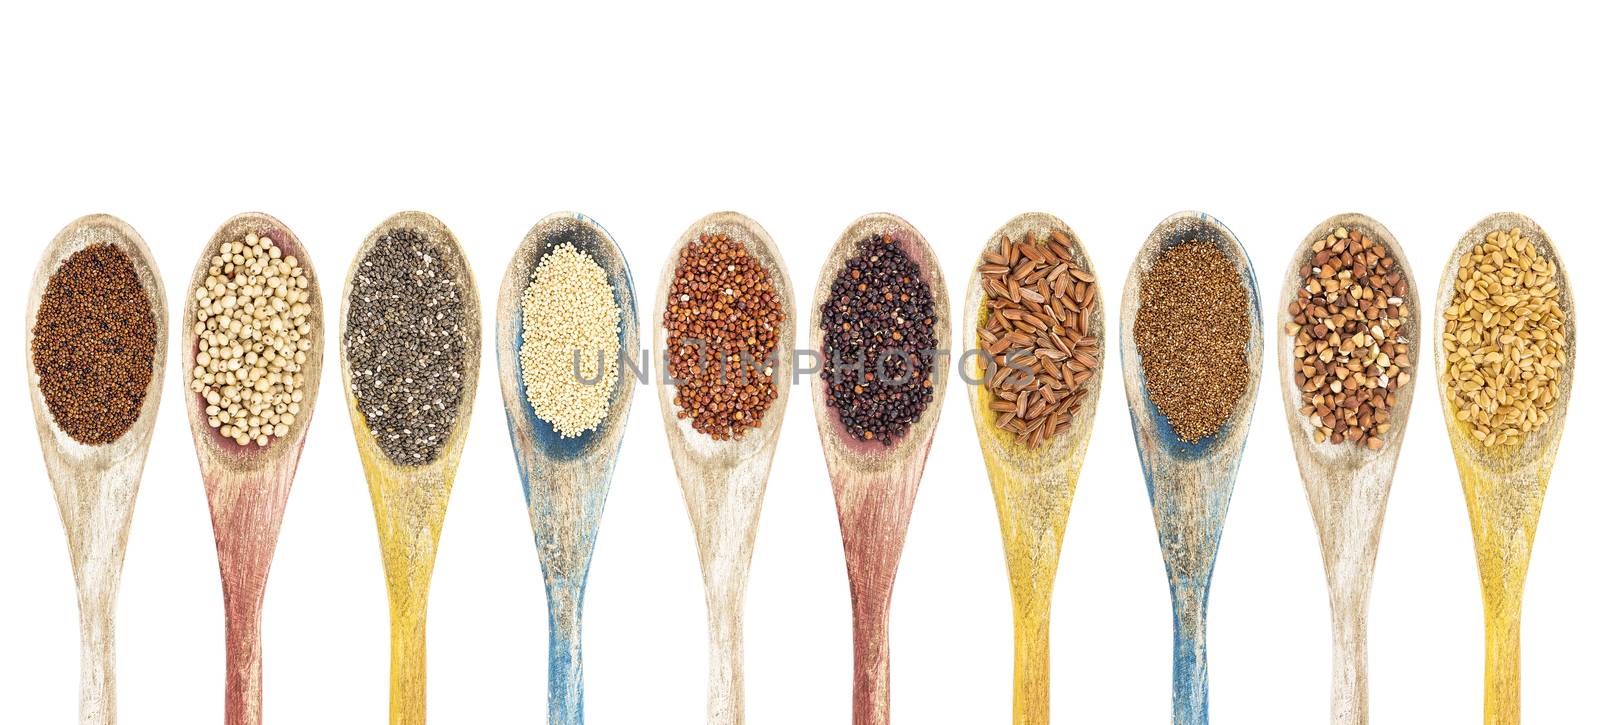 gluten frre grains and seeds by PixelsAway